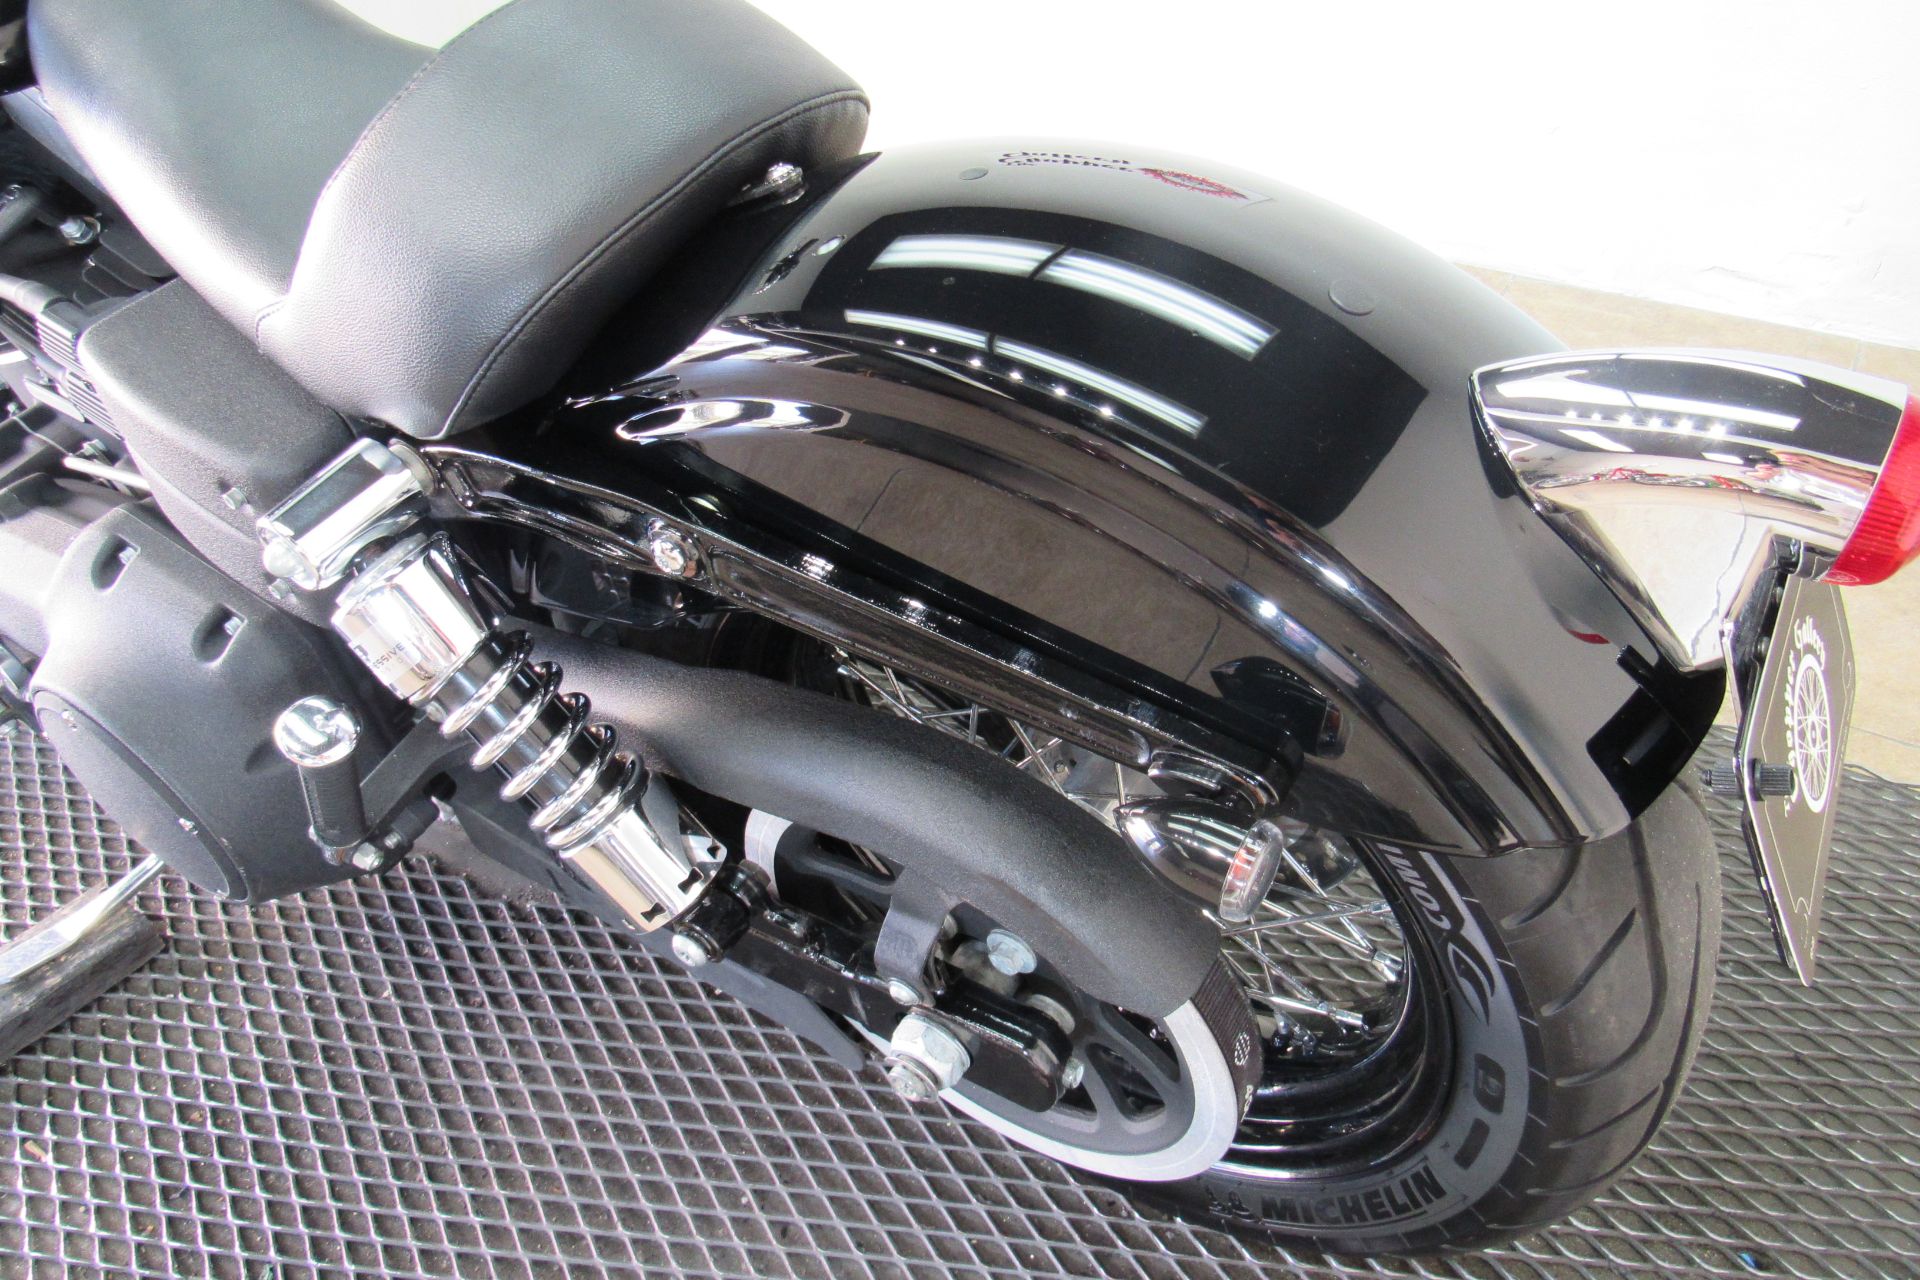 2011 Harley-Davidson Dyna® Street Bob® in Temecula, California - Photo 27